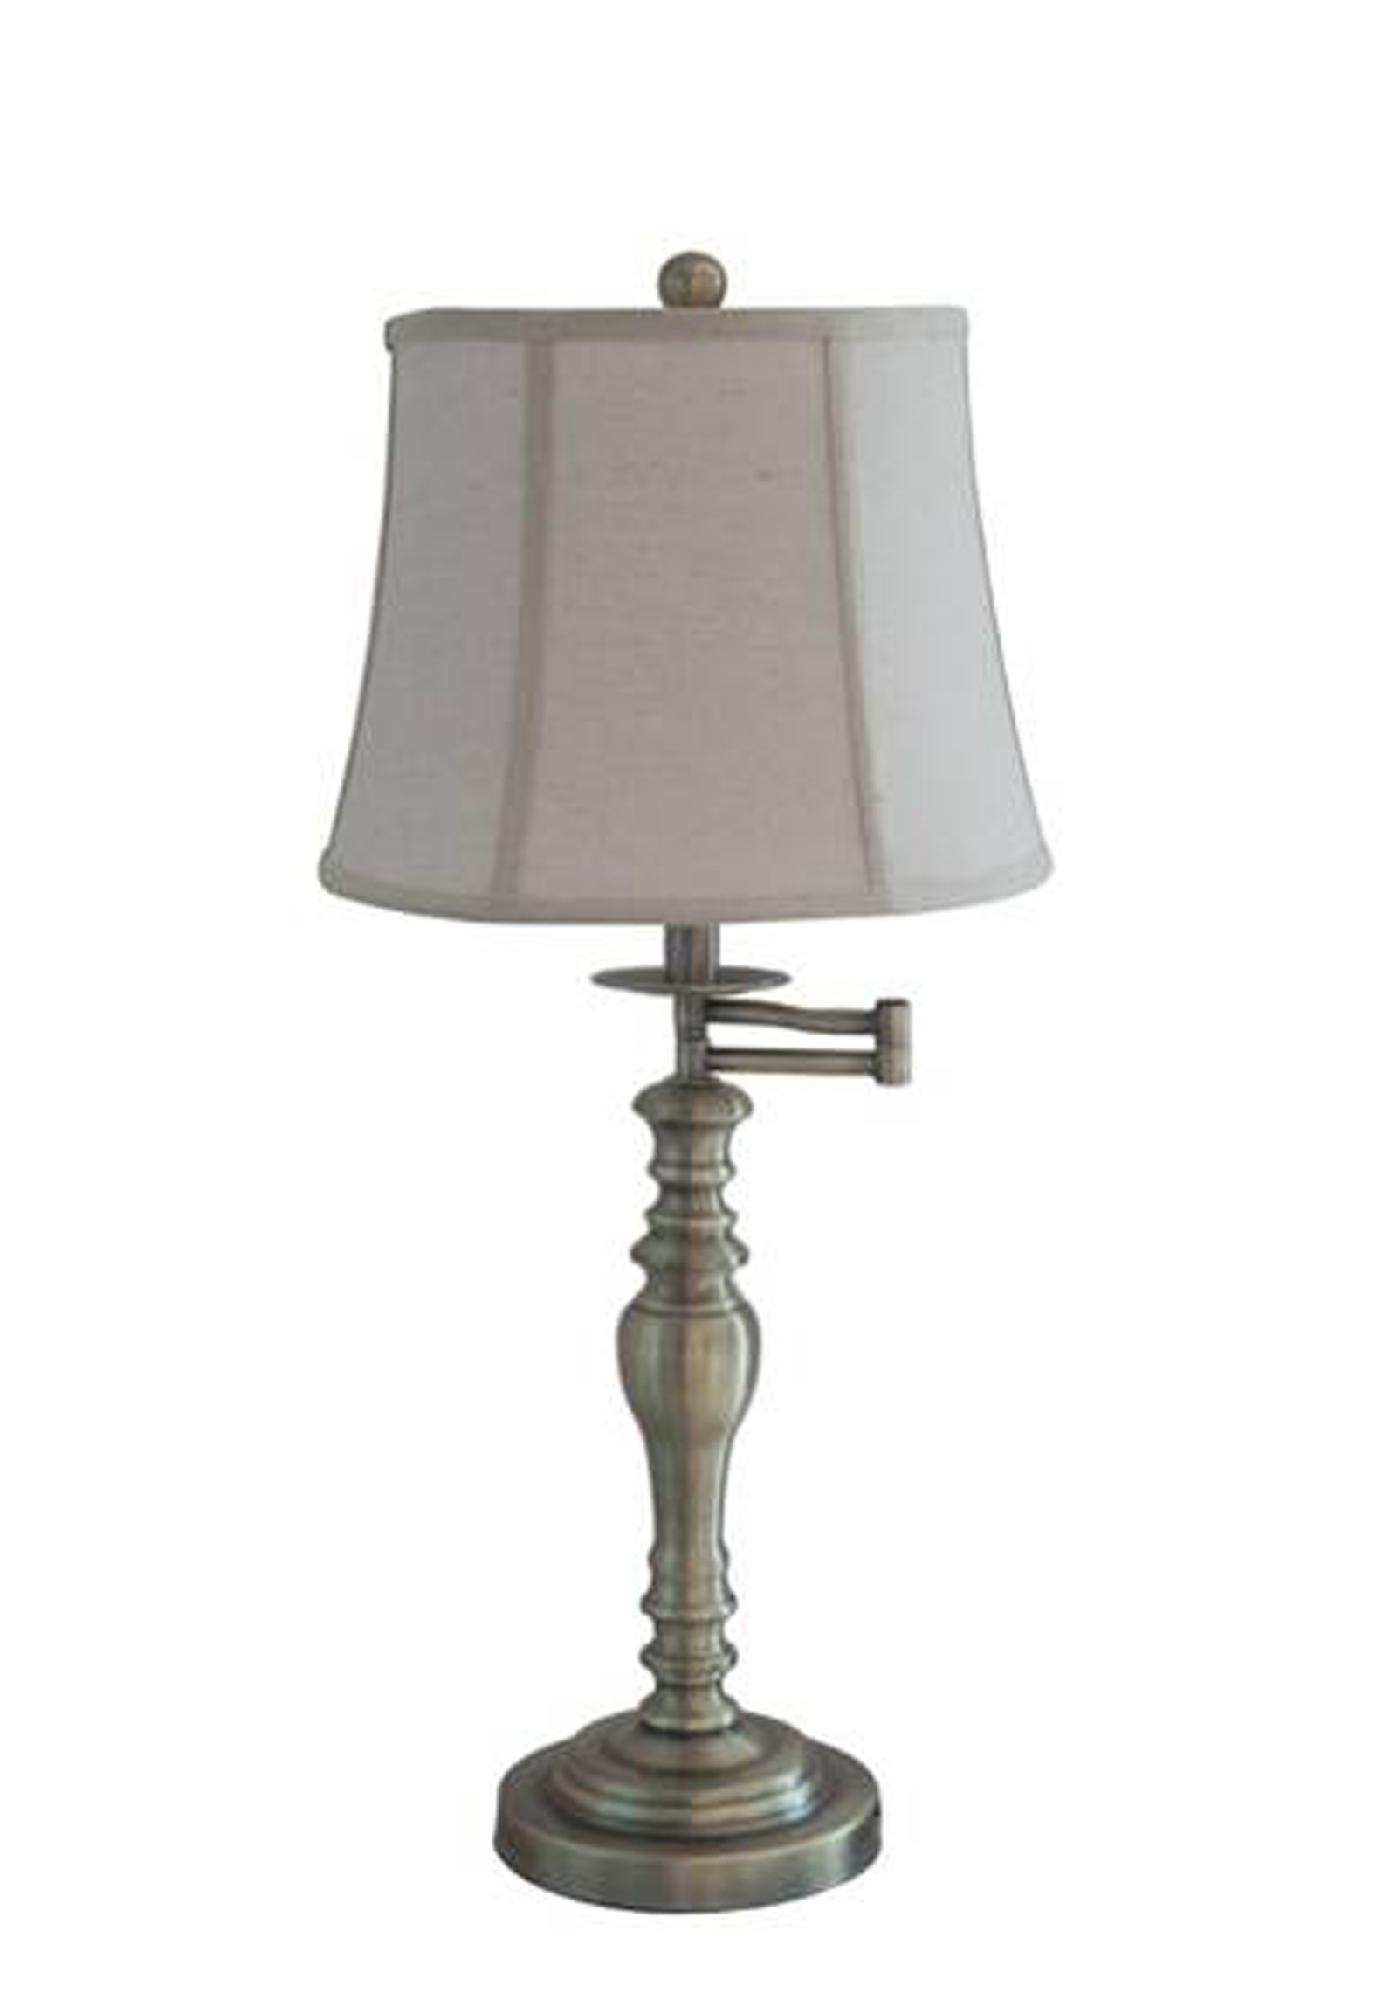 29.5" tall metal swing arm table lamp.